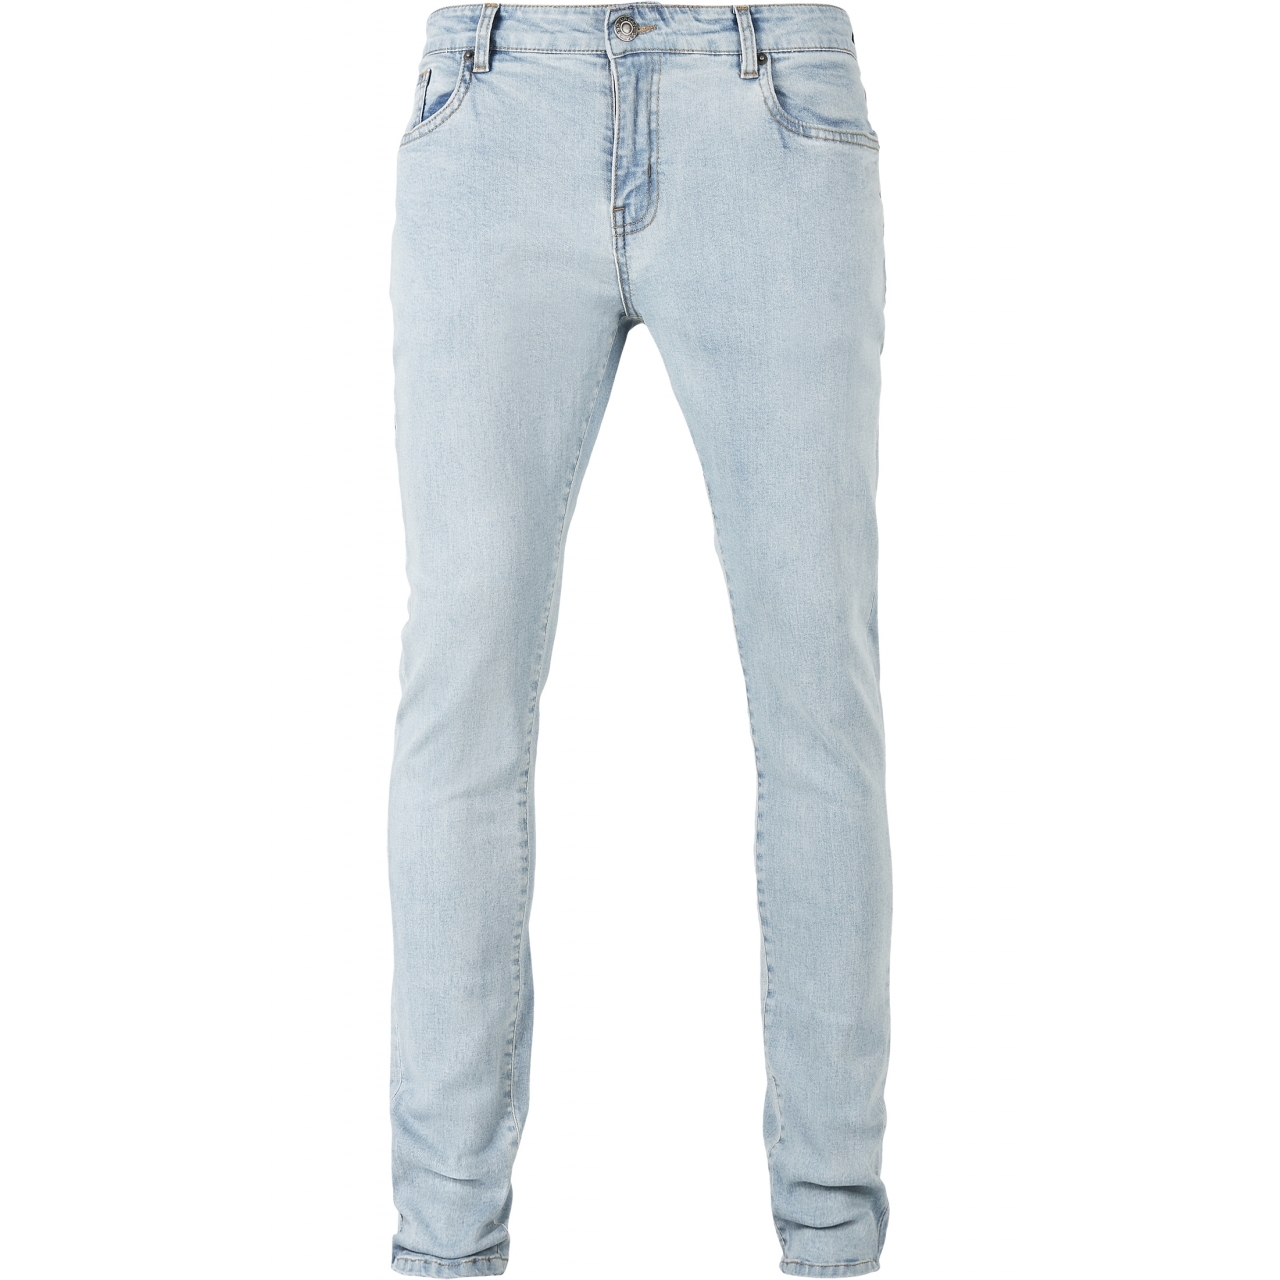 Džíny Urban Classics Slim Fit Zip Jeans - modré, 31/32